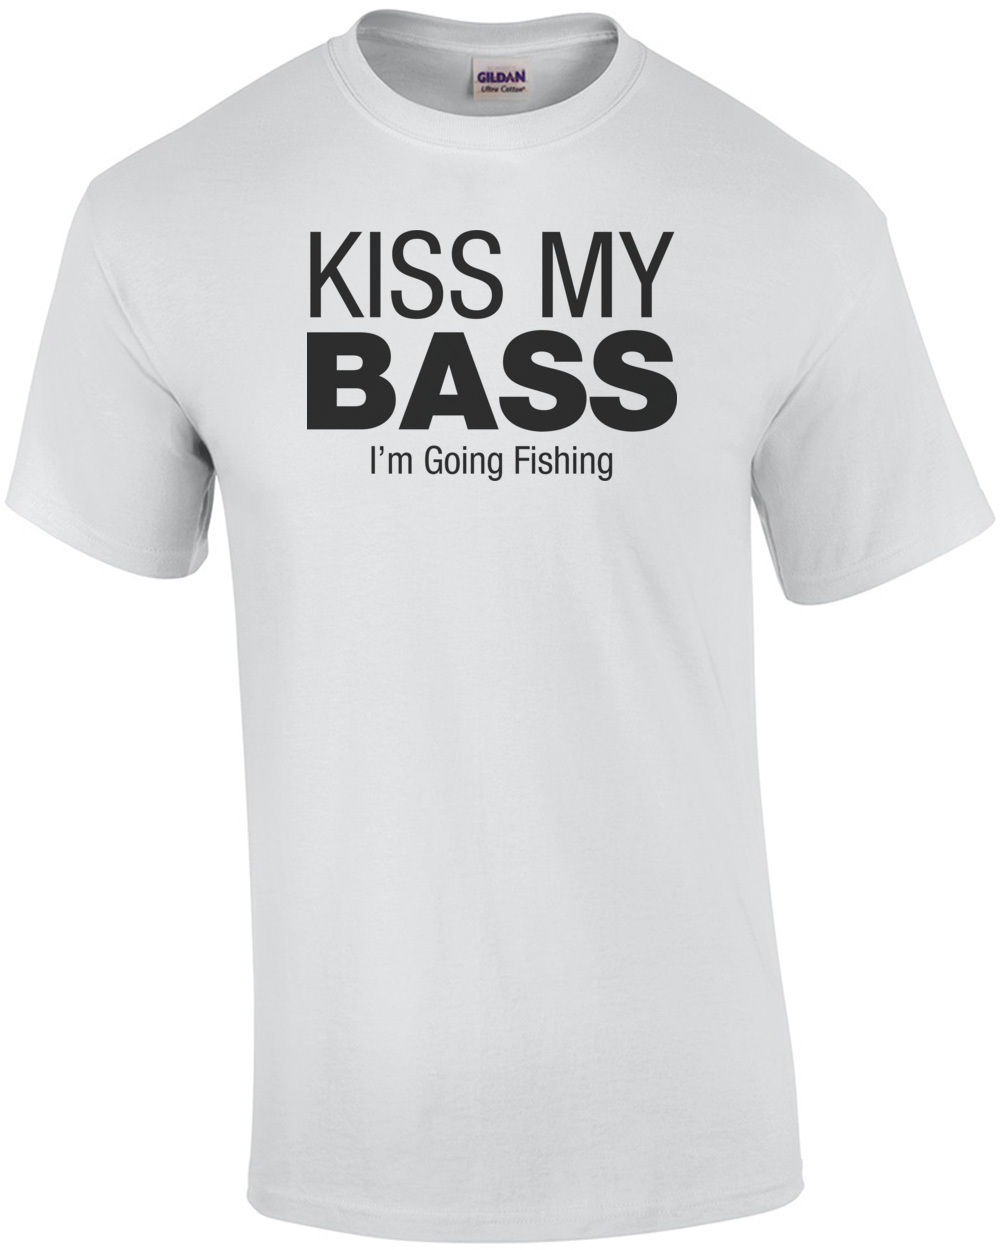 https://www.betterthanpants.com/media/catalog/product/k/i/kiss-my-bass-im-going-fishing--fisherman-tshirt-mens-regular-white.jpg